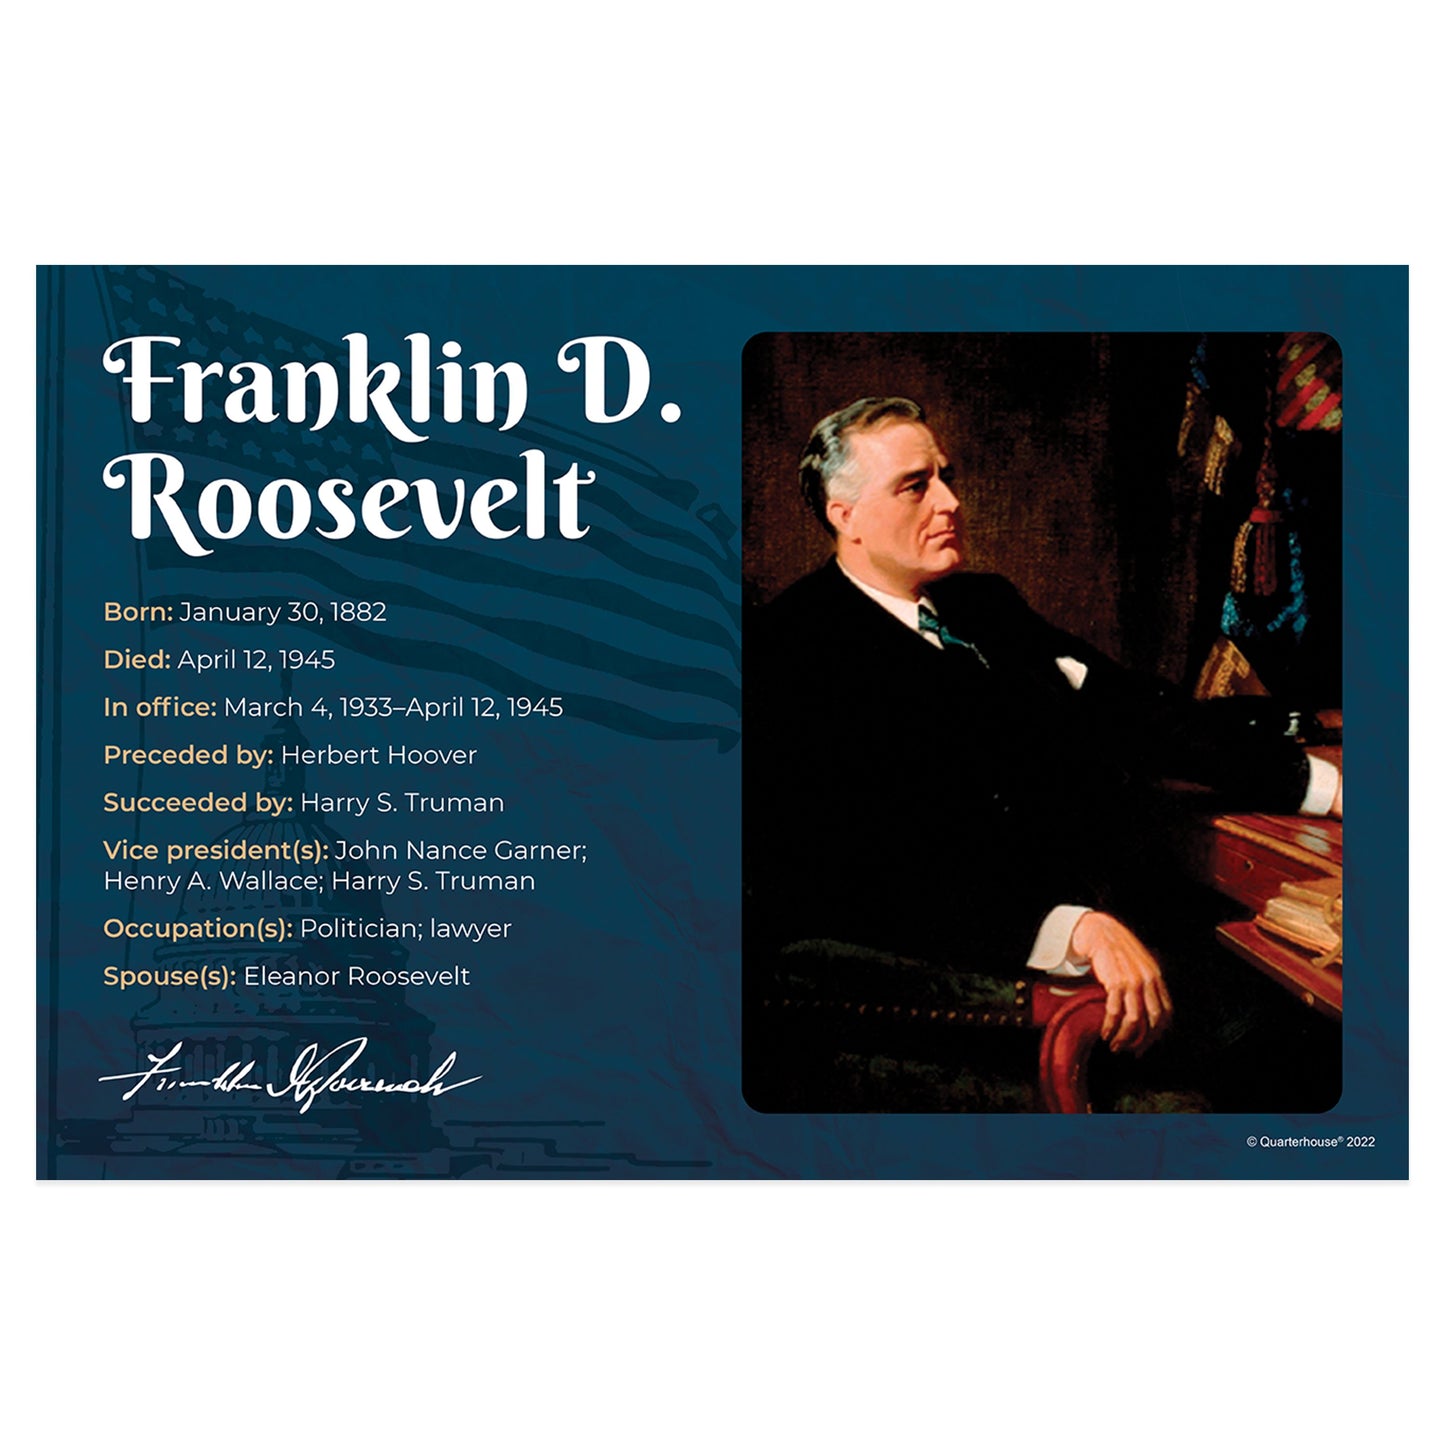 Quarterhouse President Franklin D. Roosevelt Biographical Poster, Social Studies Classroom Materials for Teachers